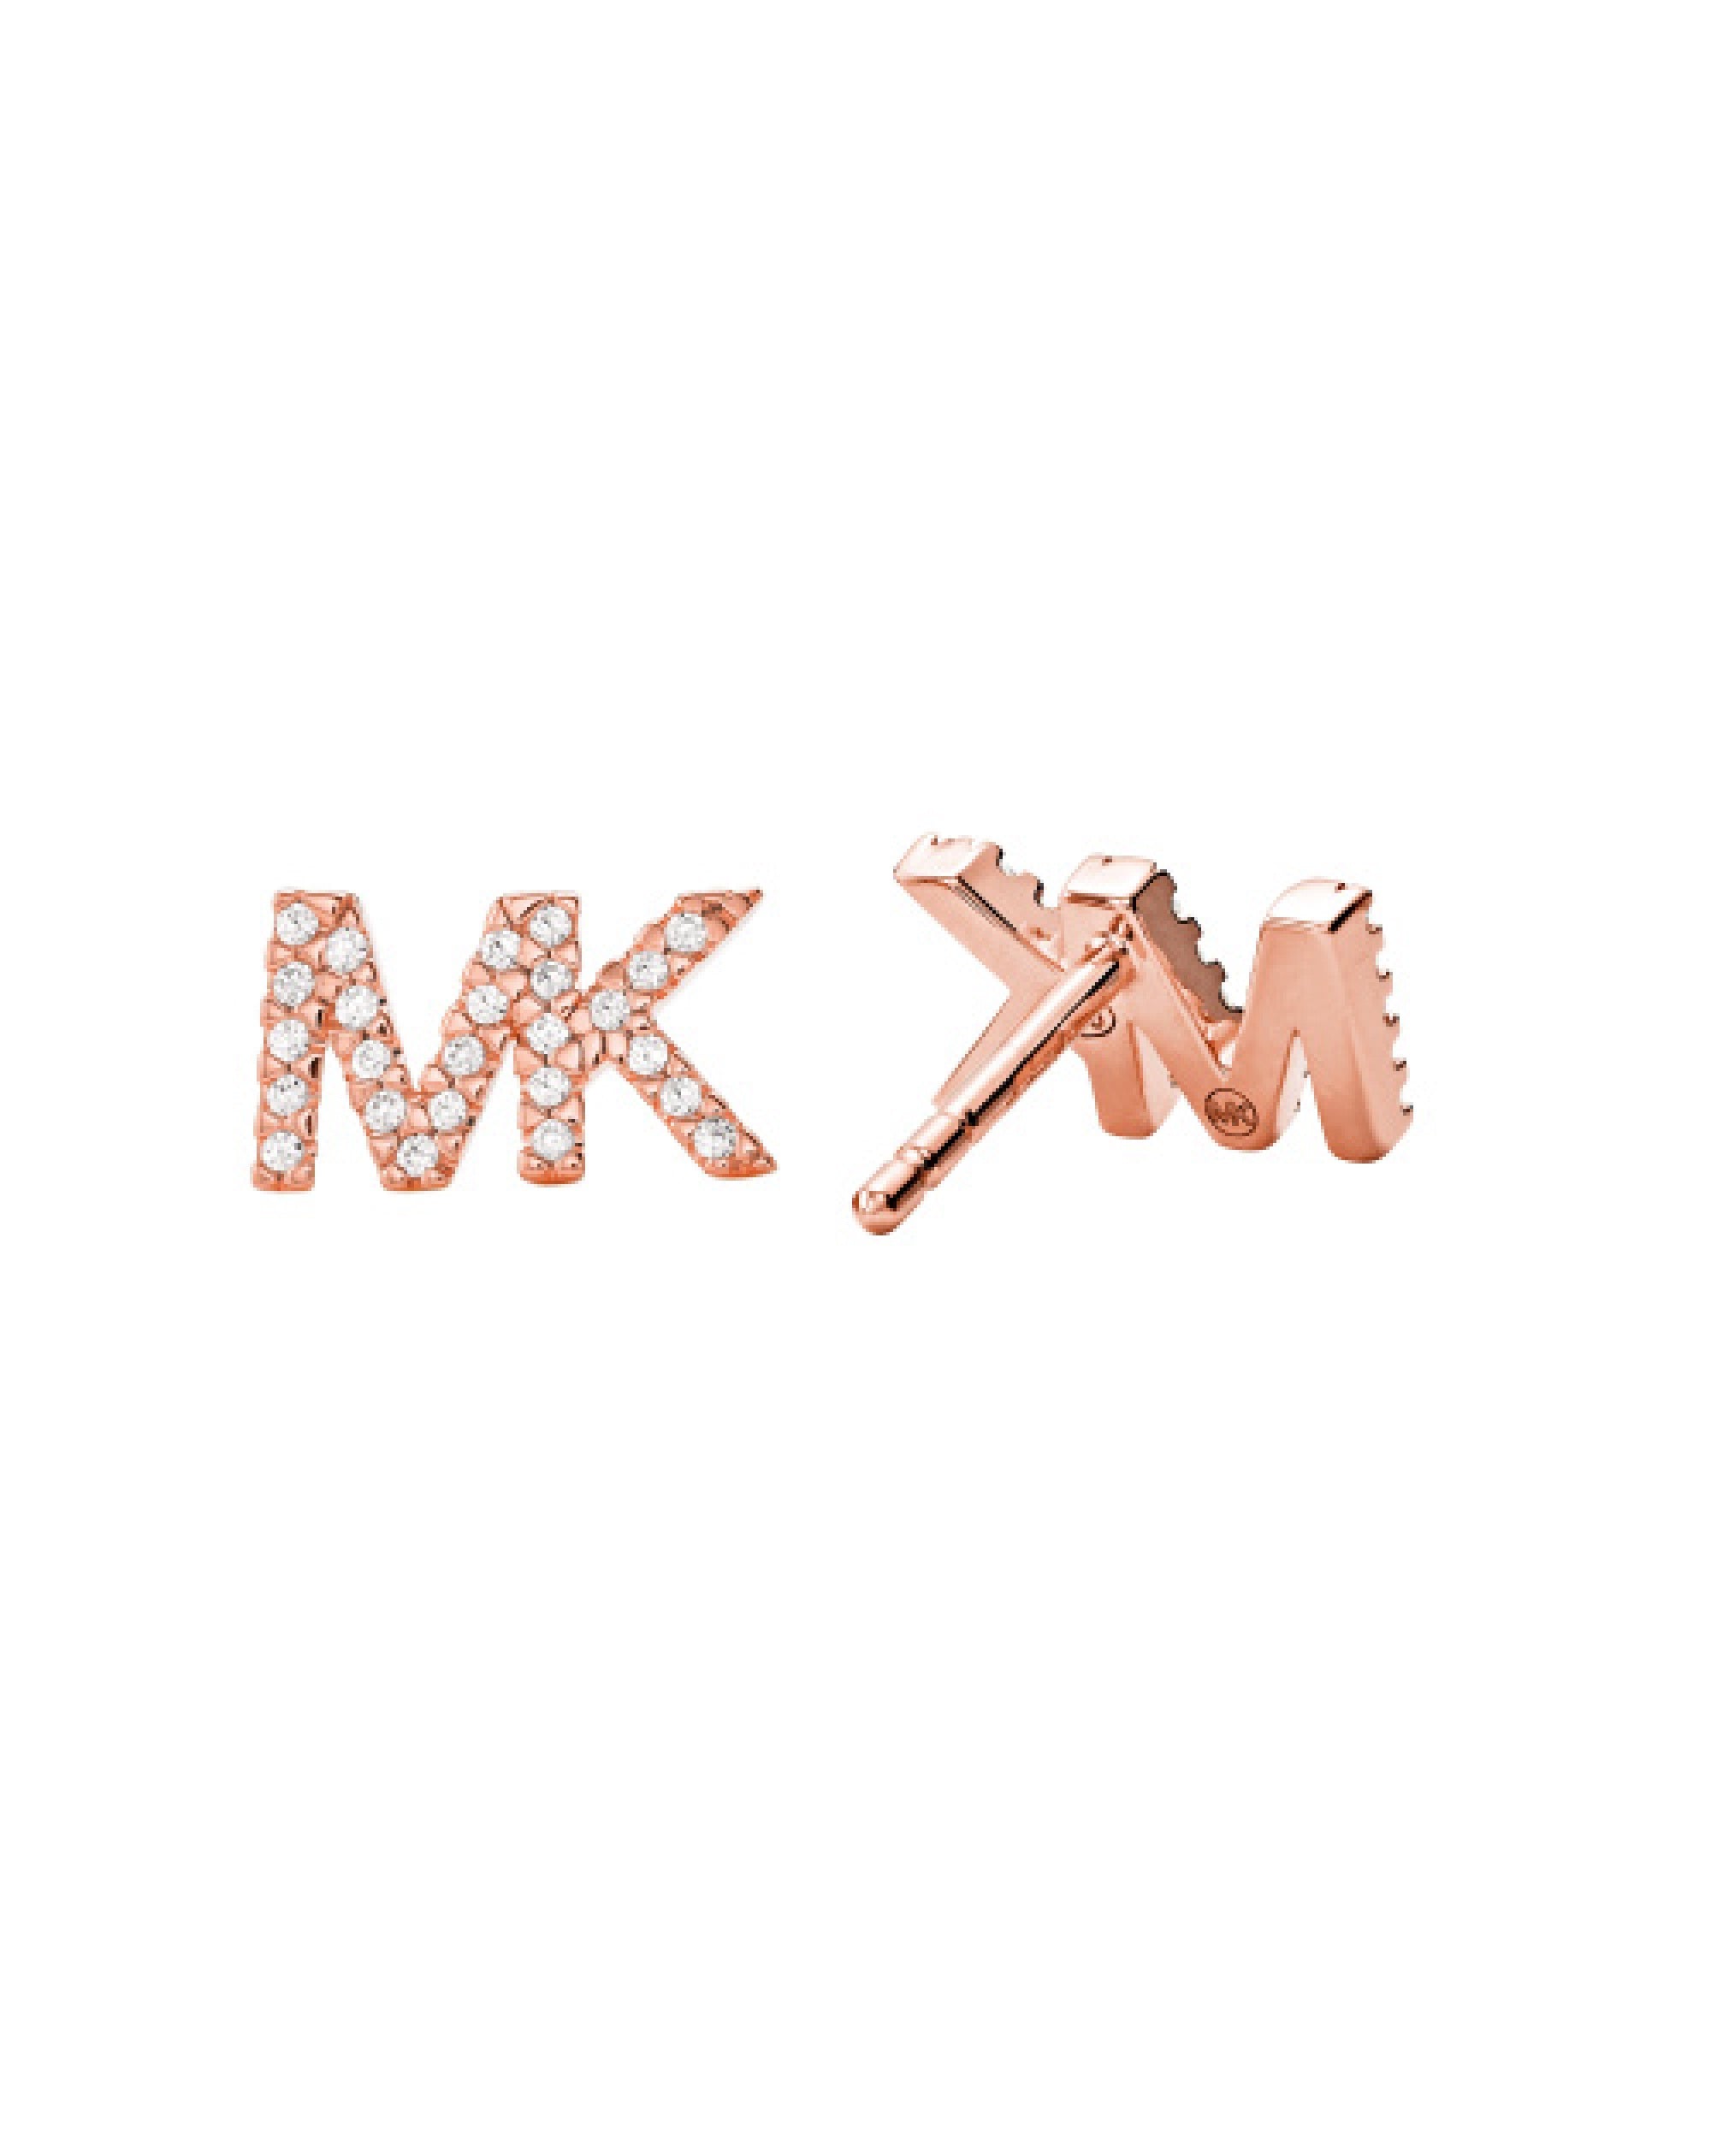 Jewelry  Michael Kors Studs Rose Gold With Pink Diamonds Earrings   Poshmark